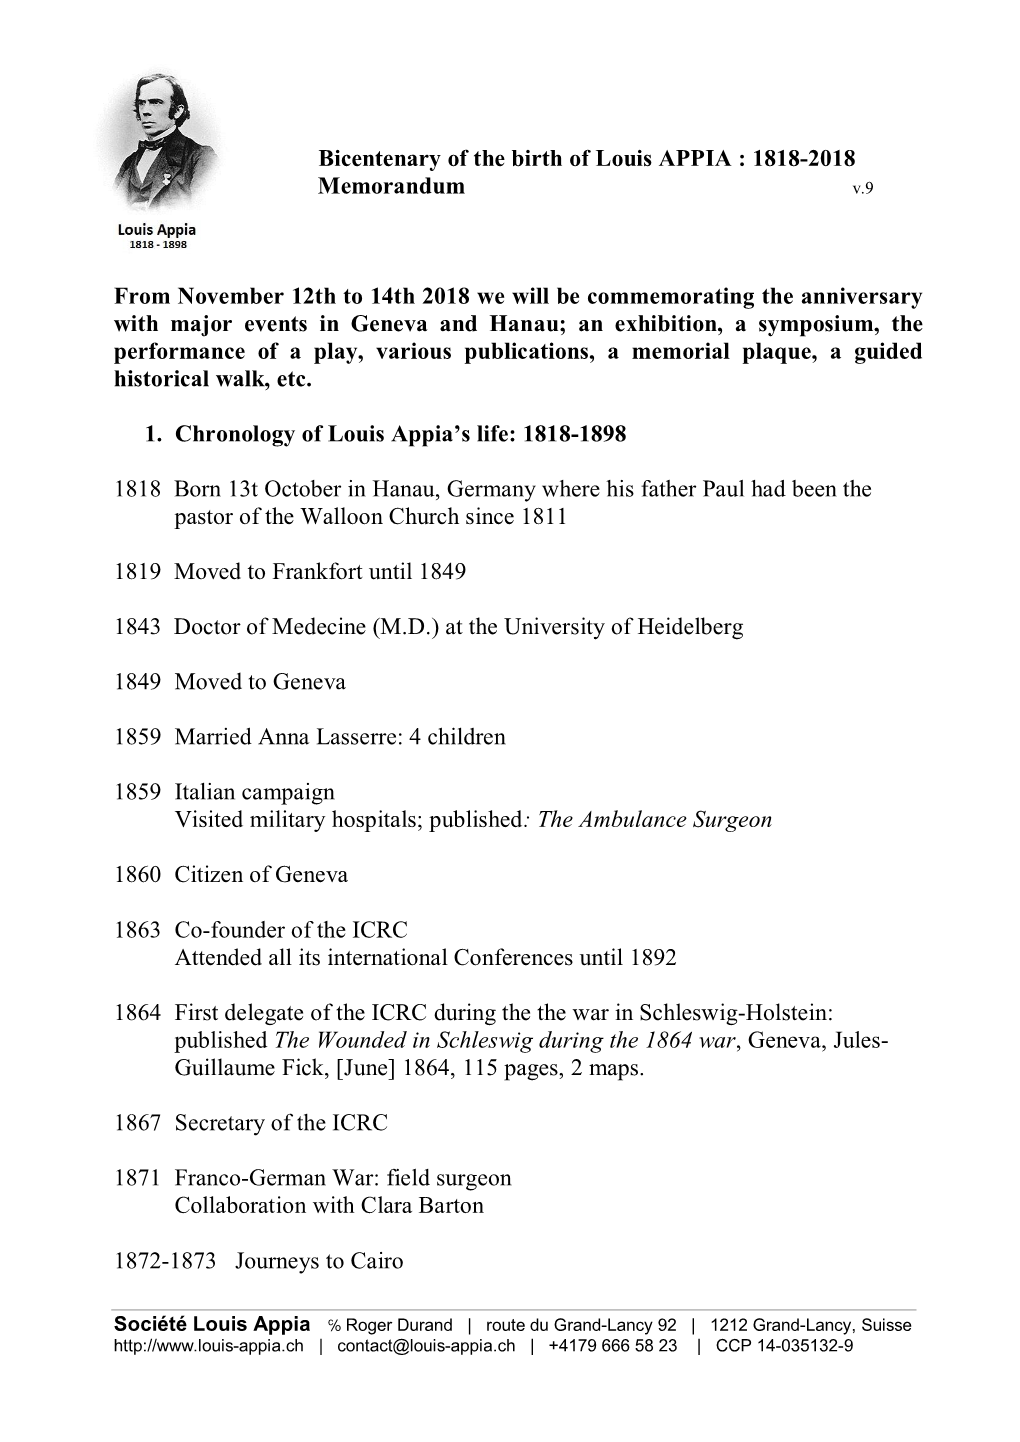 Bicentenary of the Birth of Louis APPIA : 1818-2018 Memorandum From